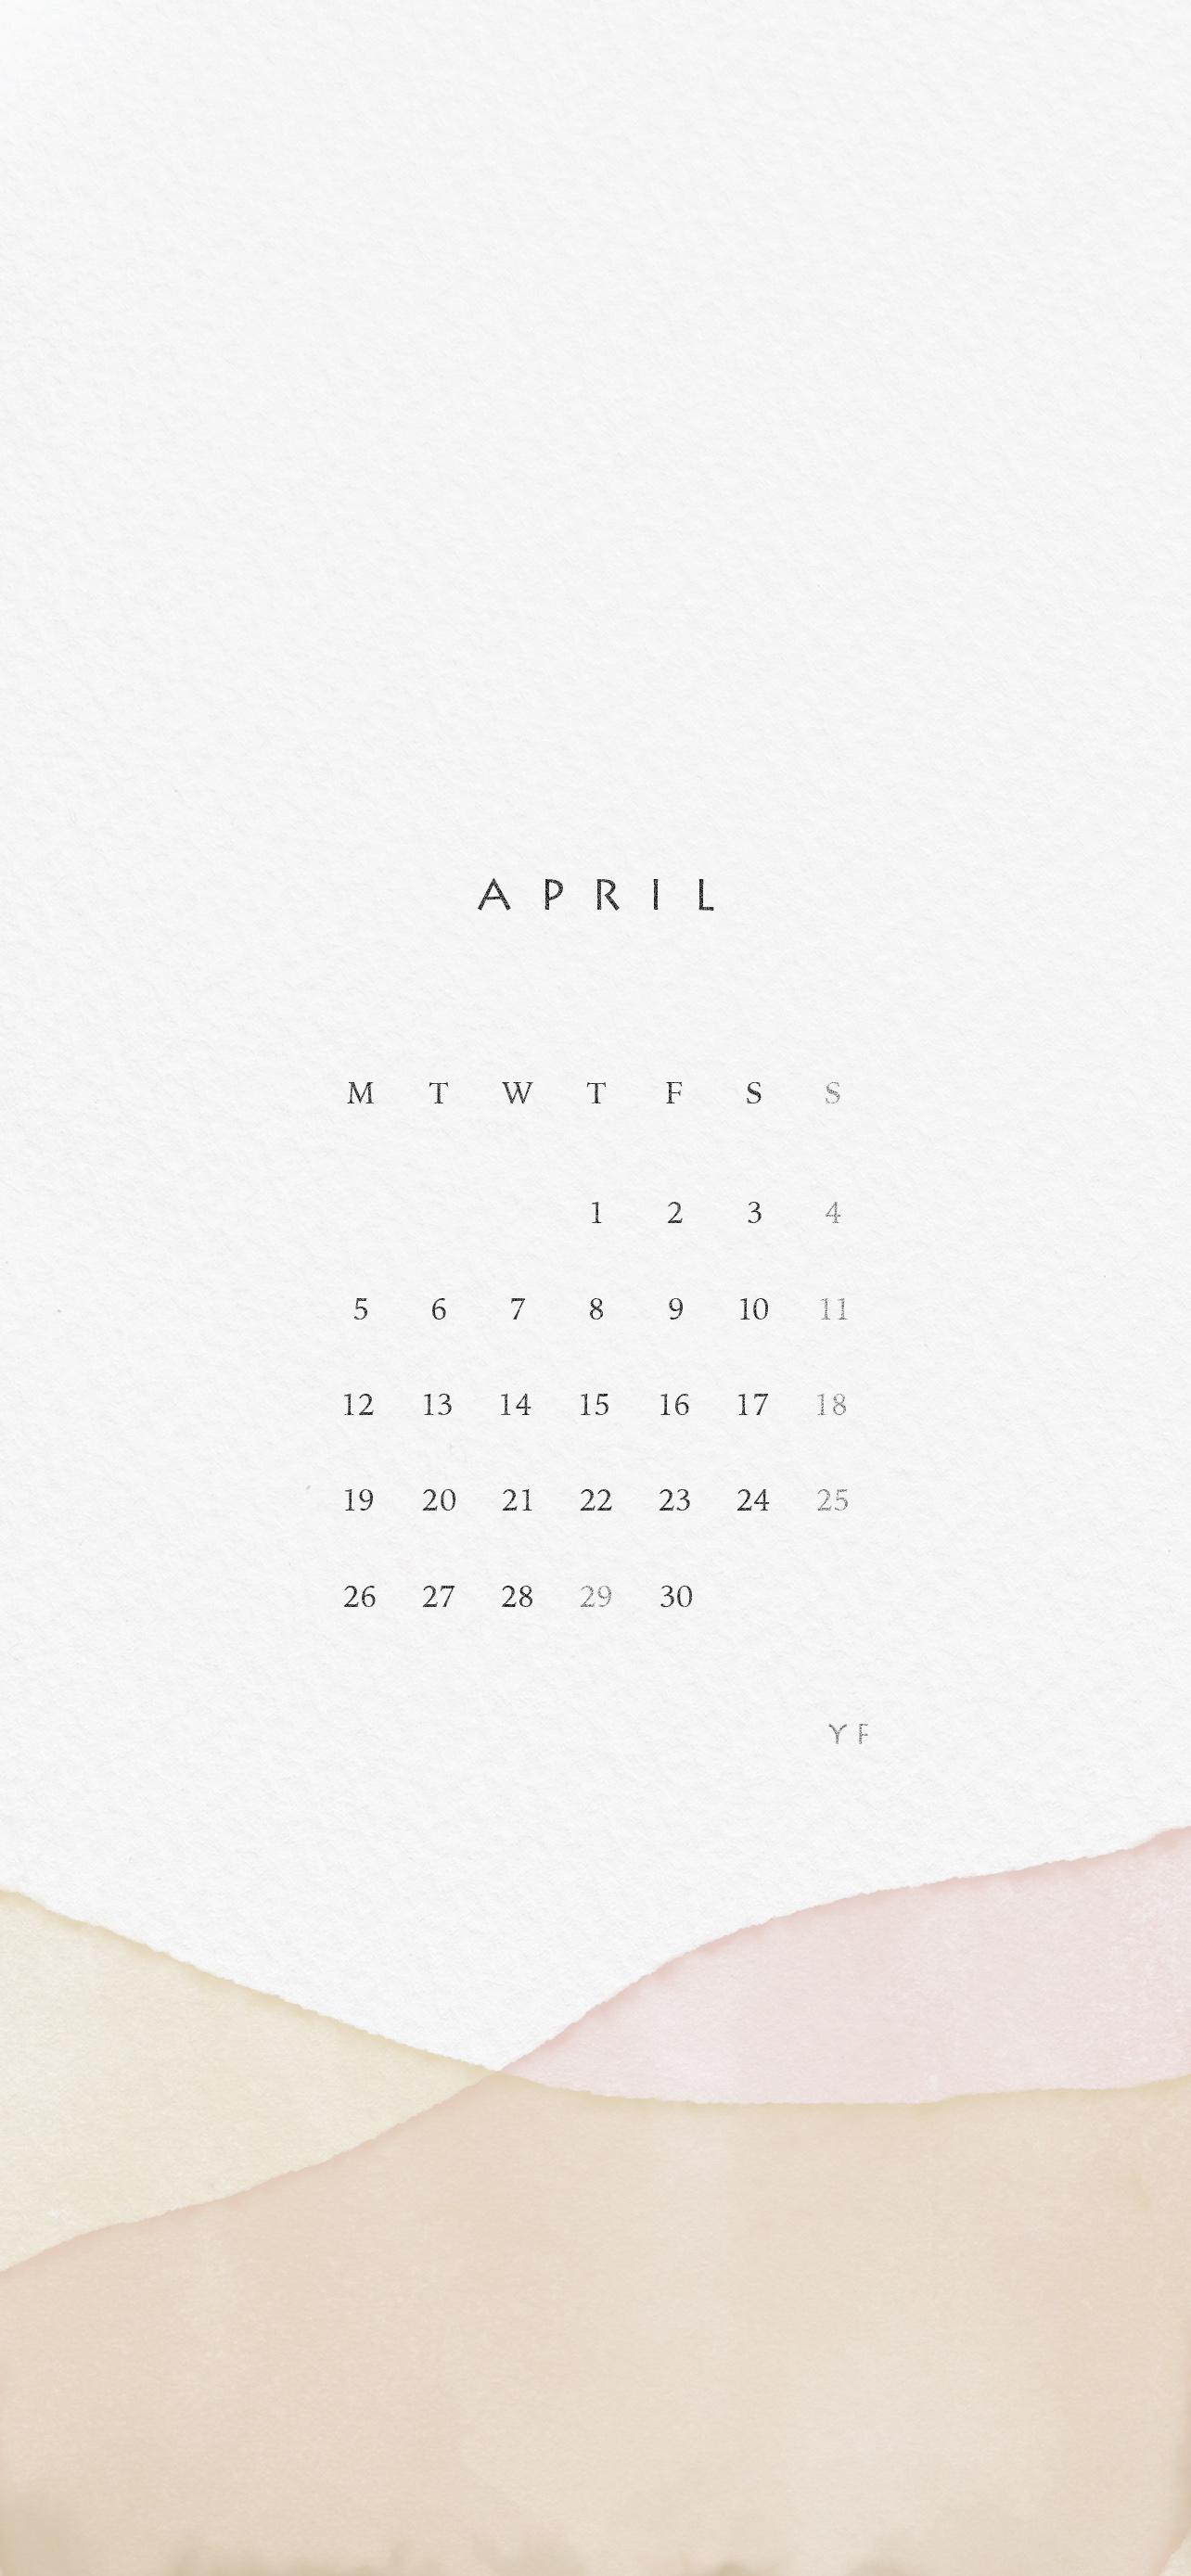 April 21 Calendar Wallpaper For The Iphone Design By Yf